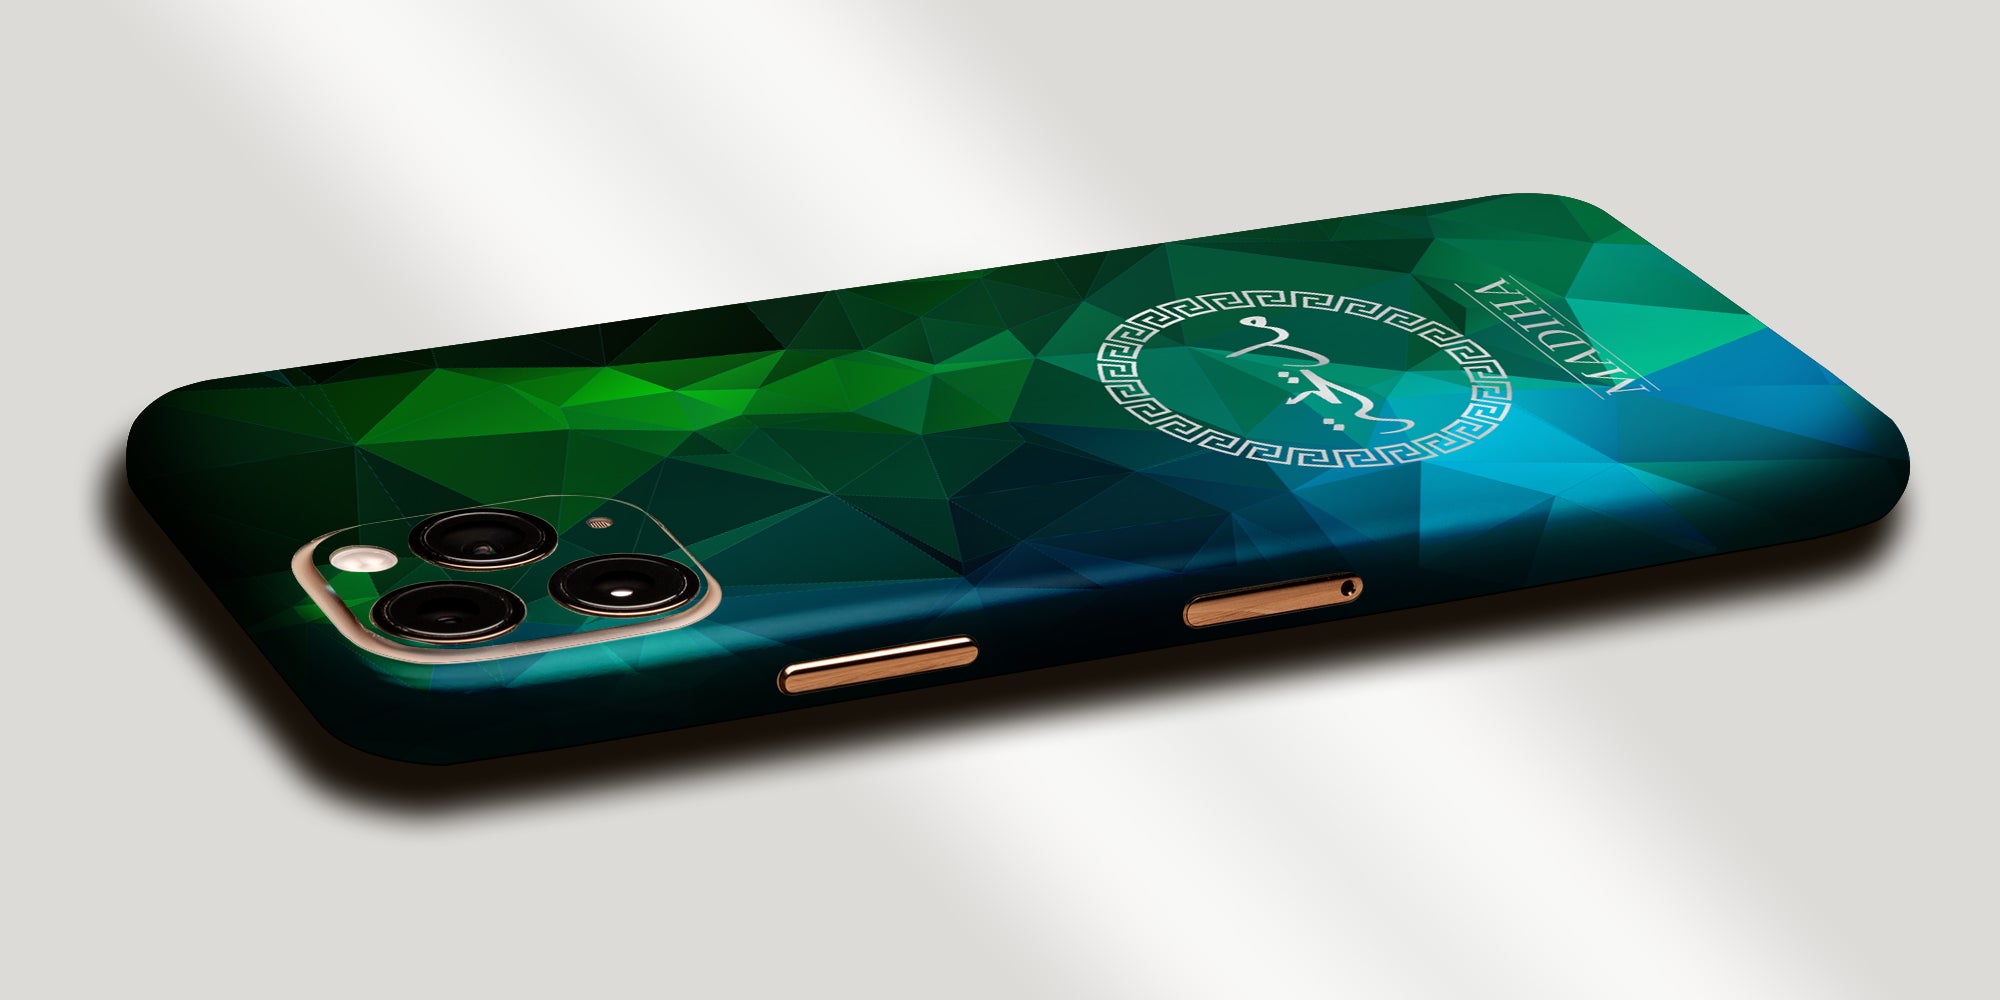 Geometric Design Decal Skin With Personalised Arabic Name Phone Wrap - Green